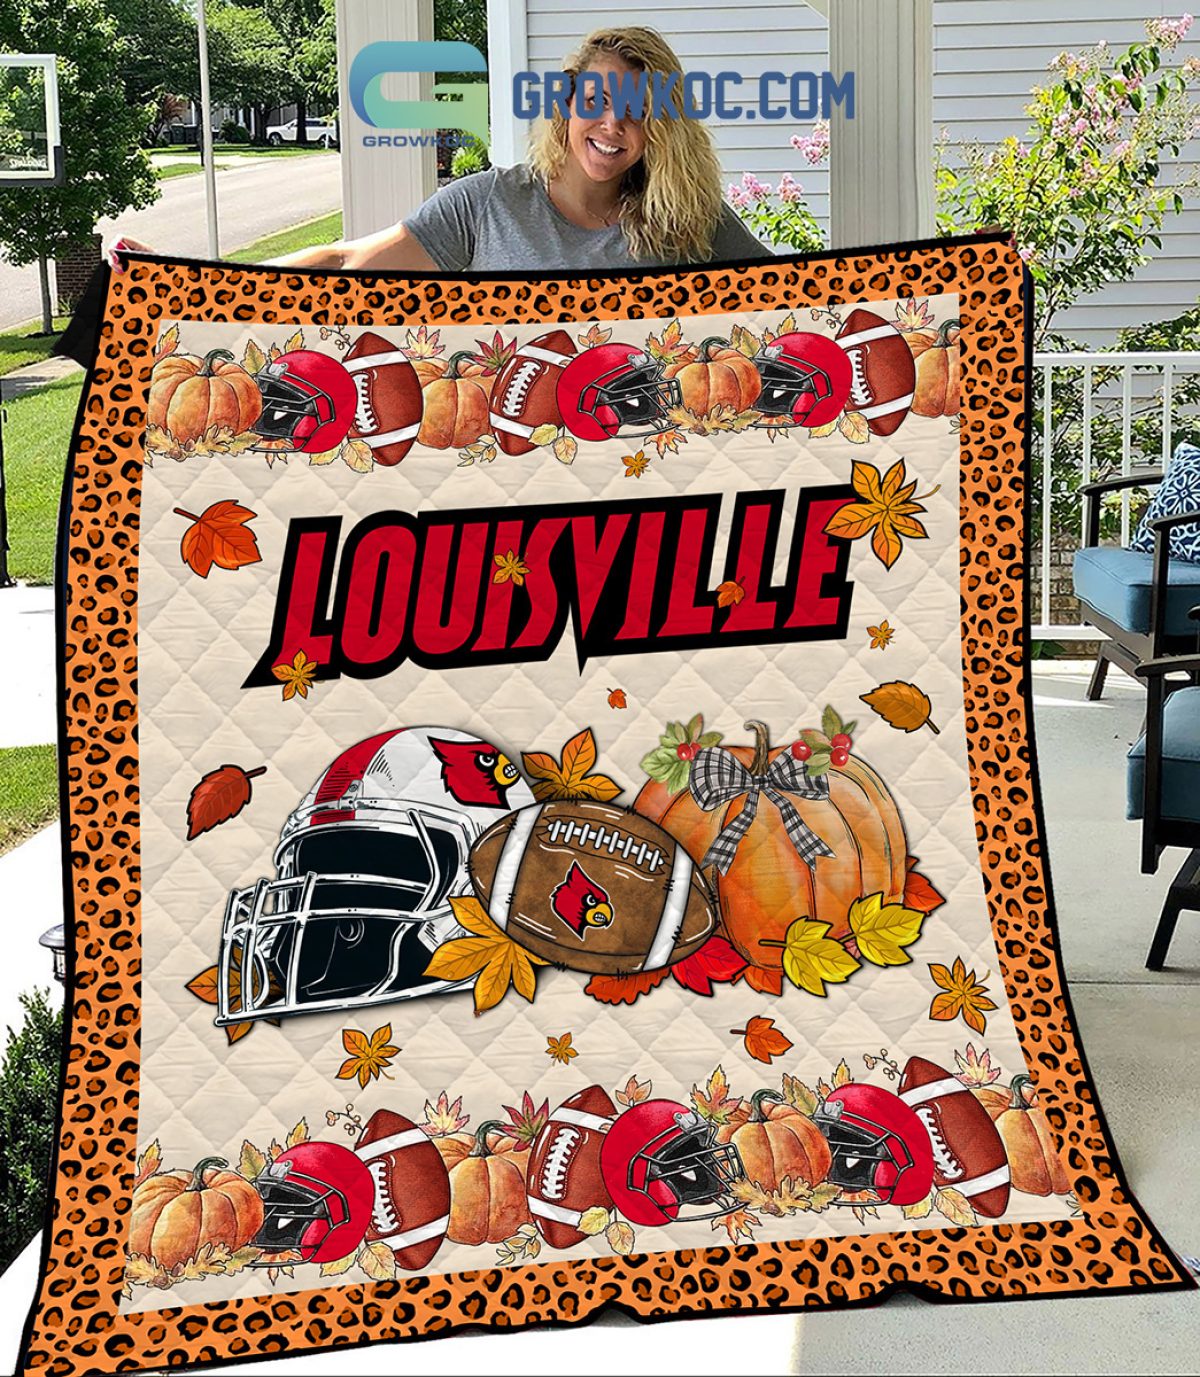 Blanket Louisville